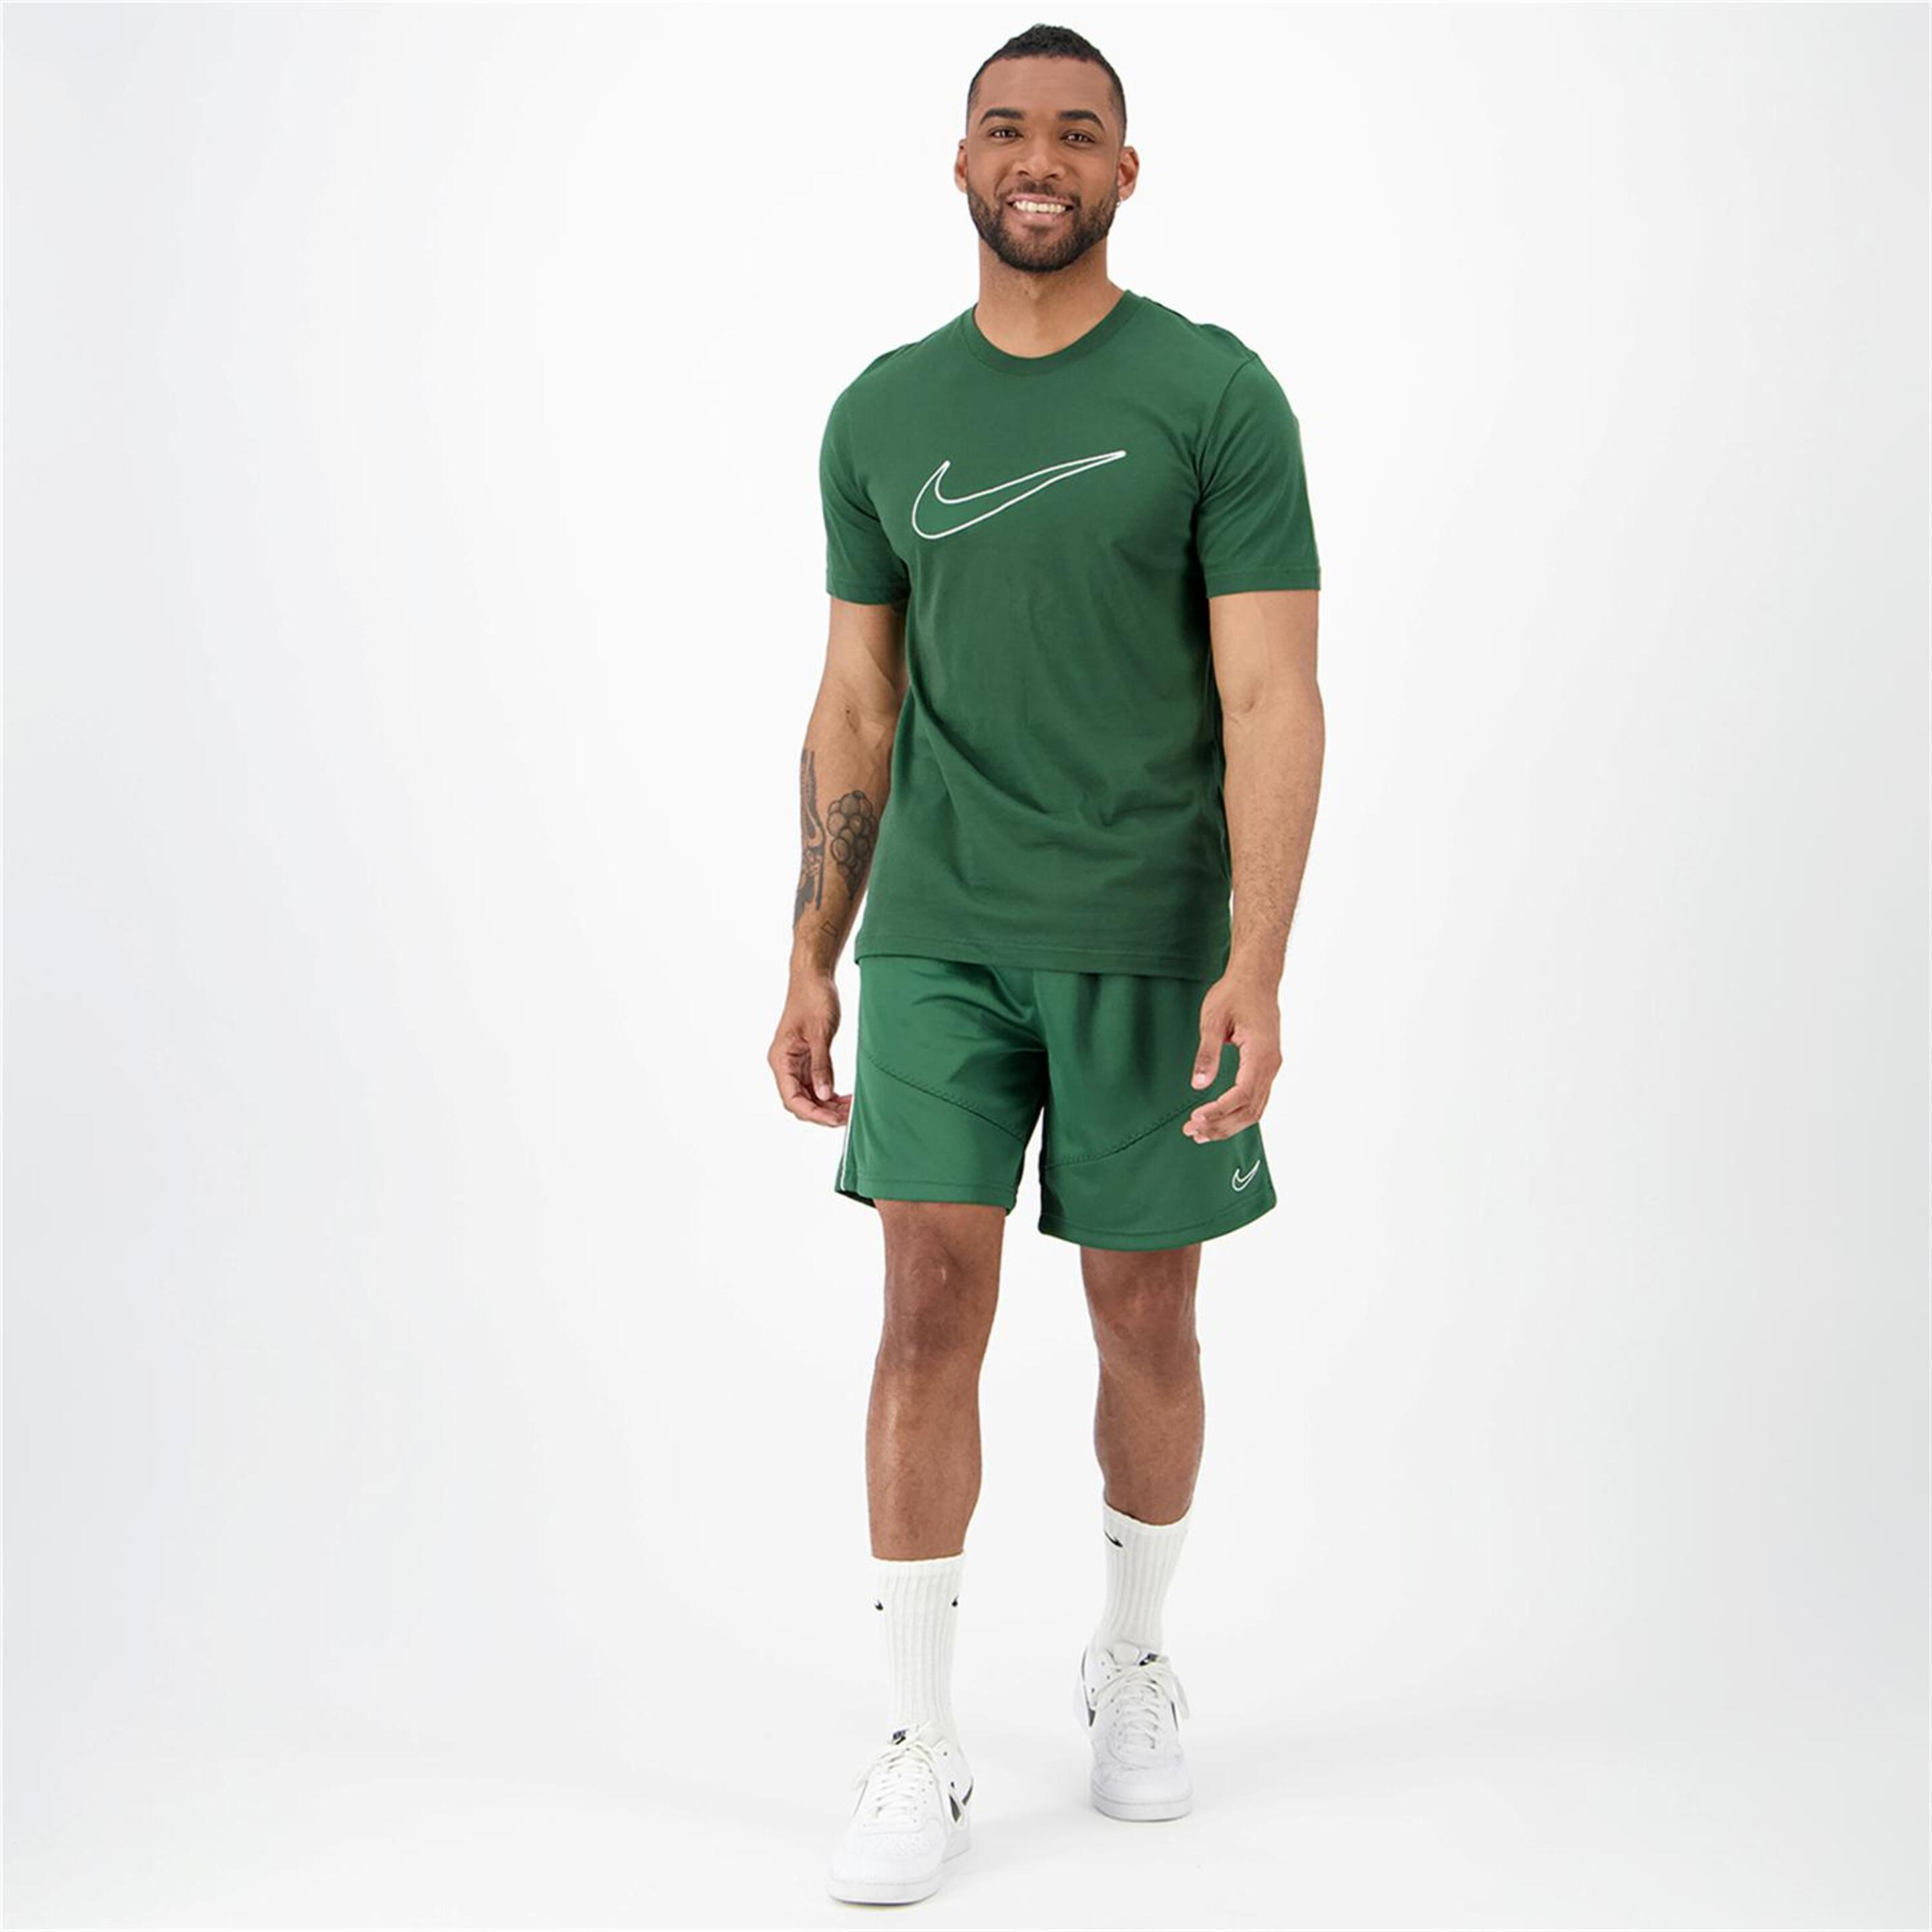 Nike SP - Verde - Camiseta Hombre